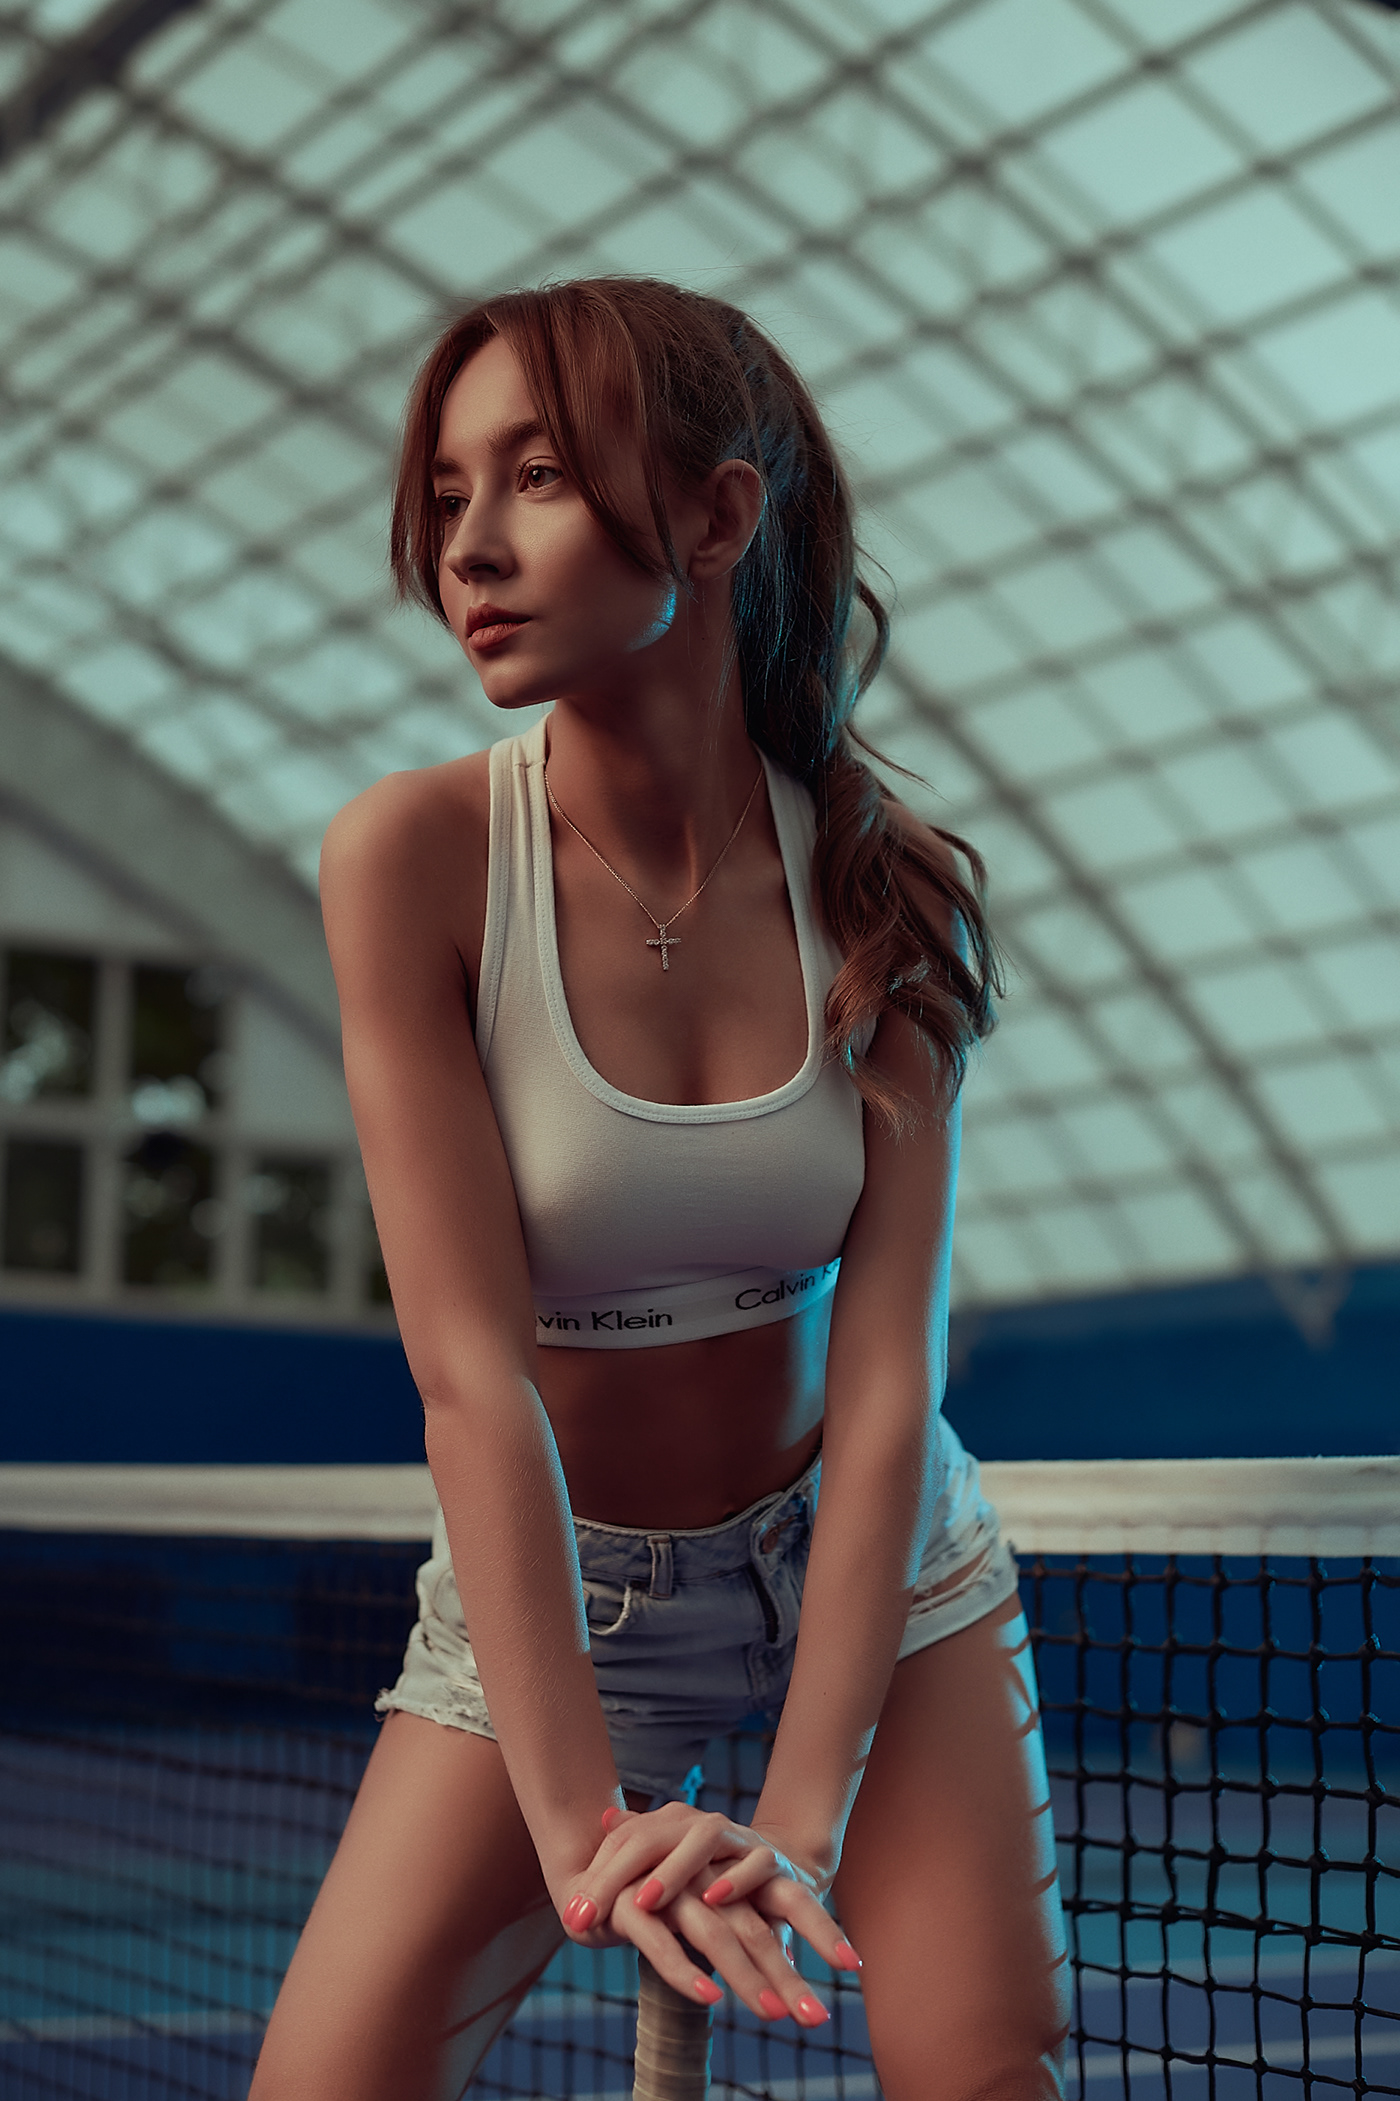 girls lifestyle nu photo sex sexy sport tenis tenniss